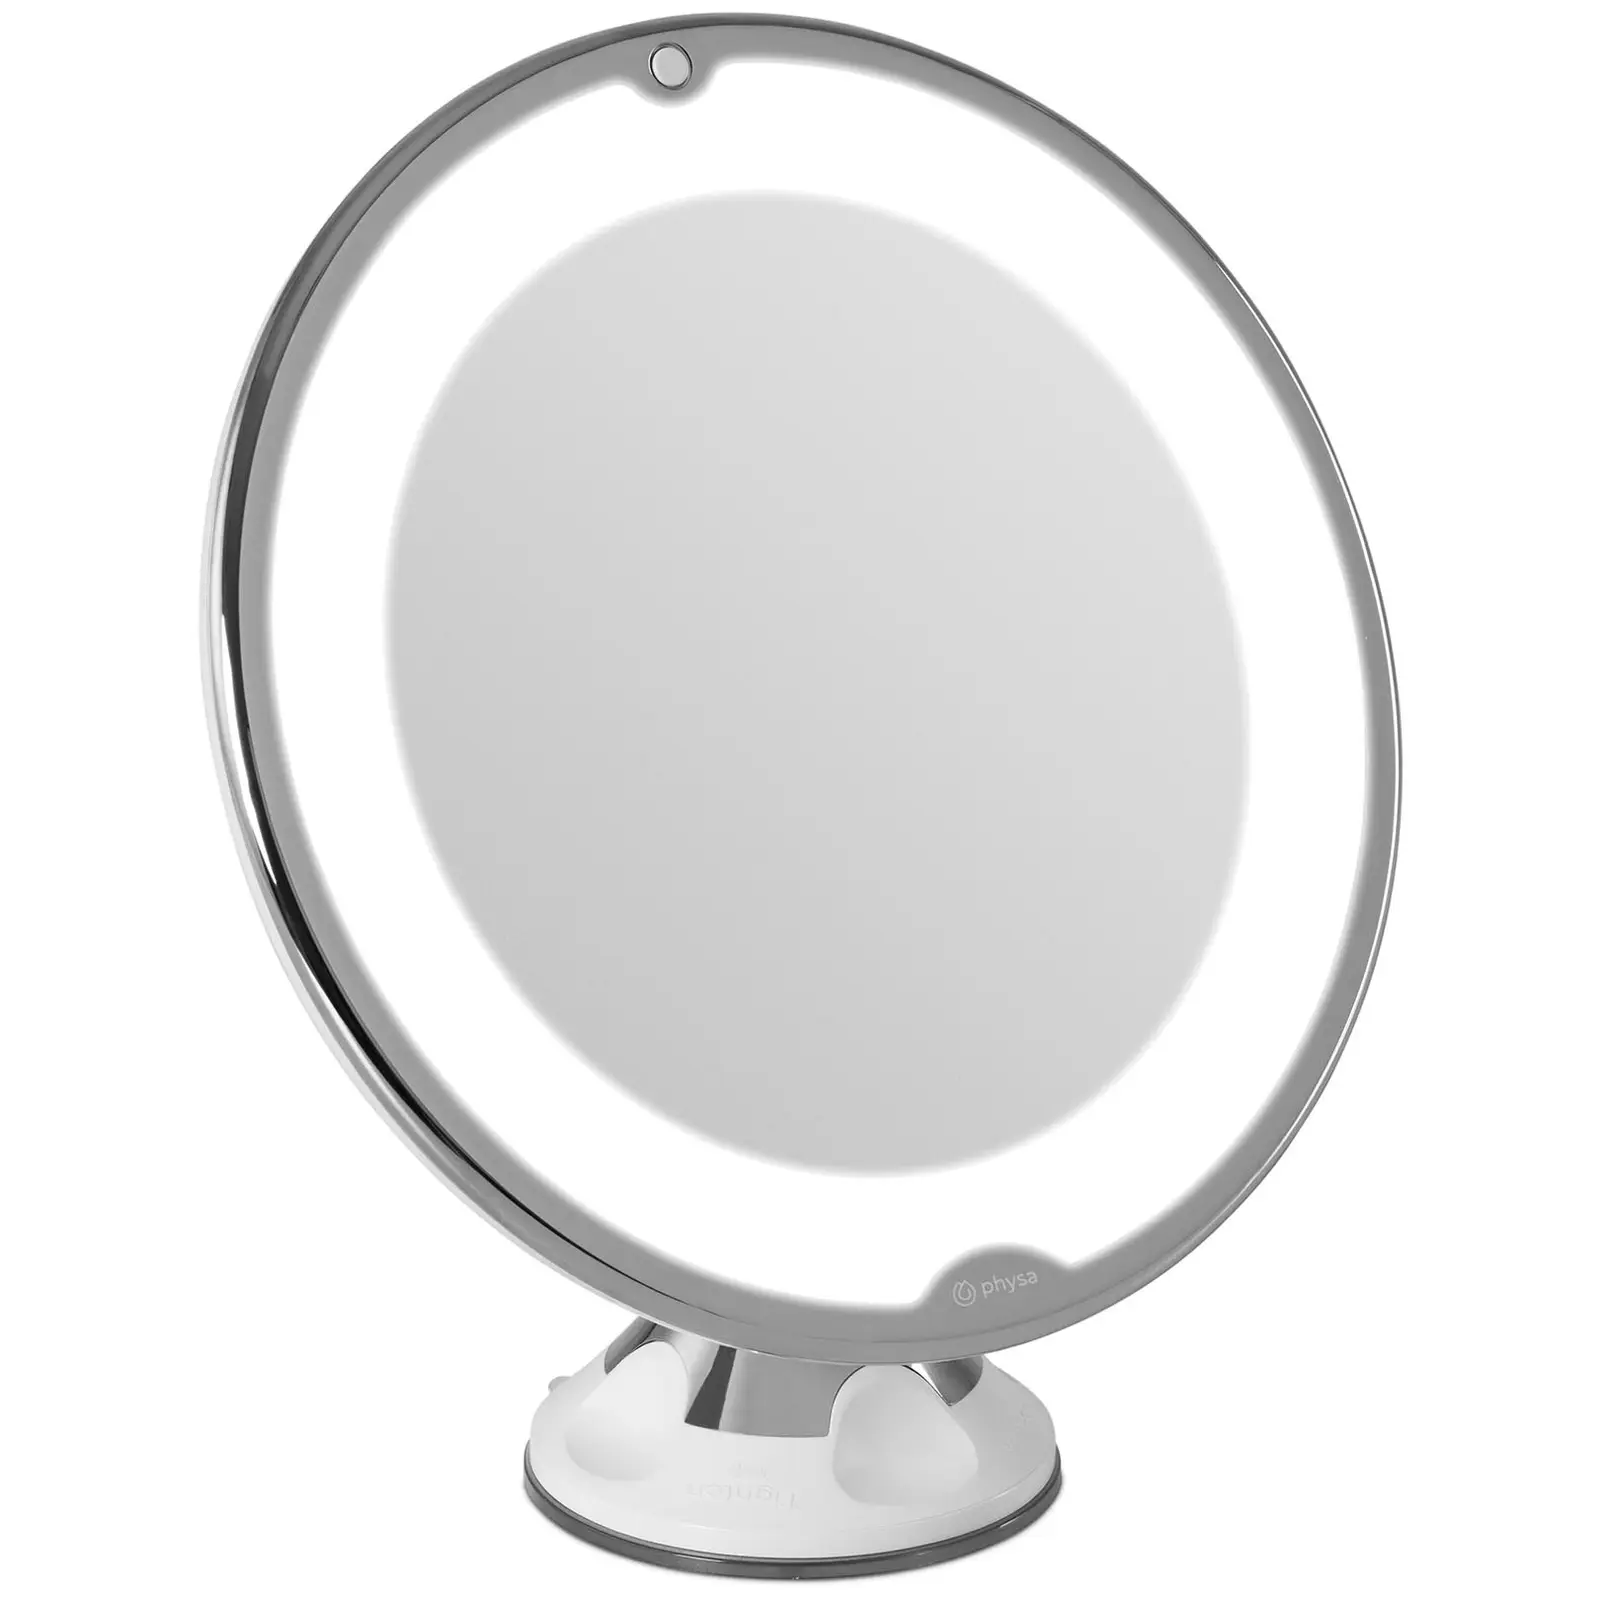 LED Vanity Mirror - white - 10x magnification - 10 LEDs - round